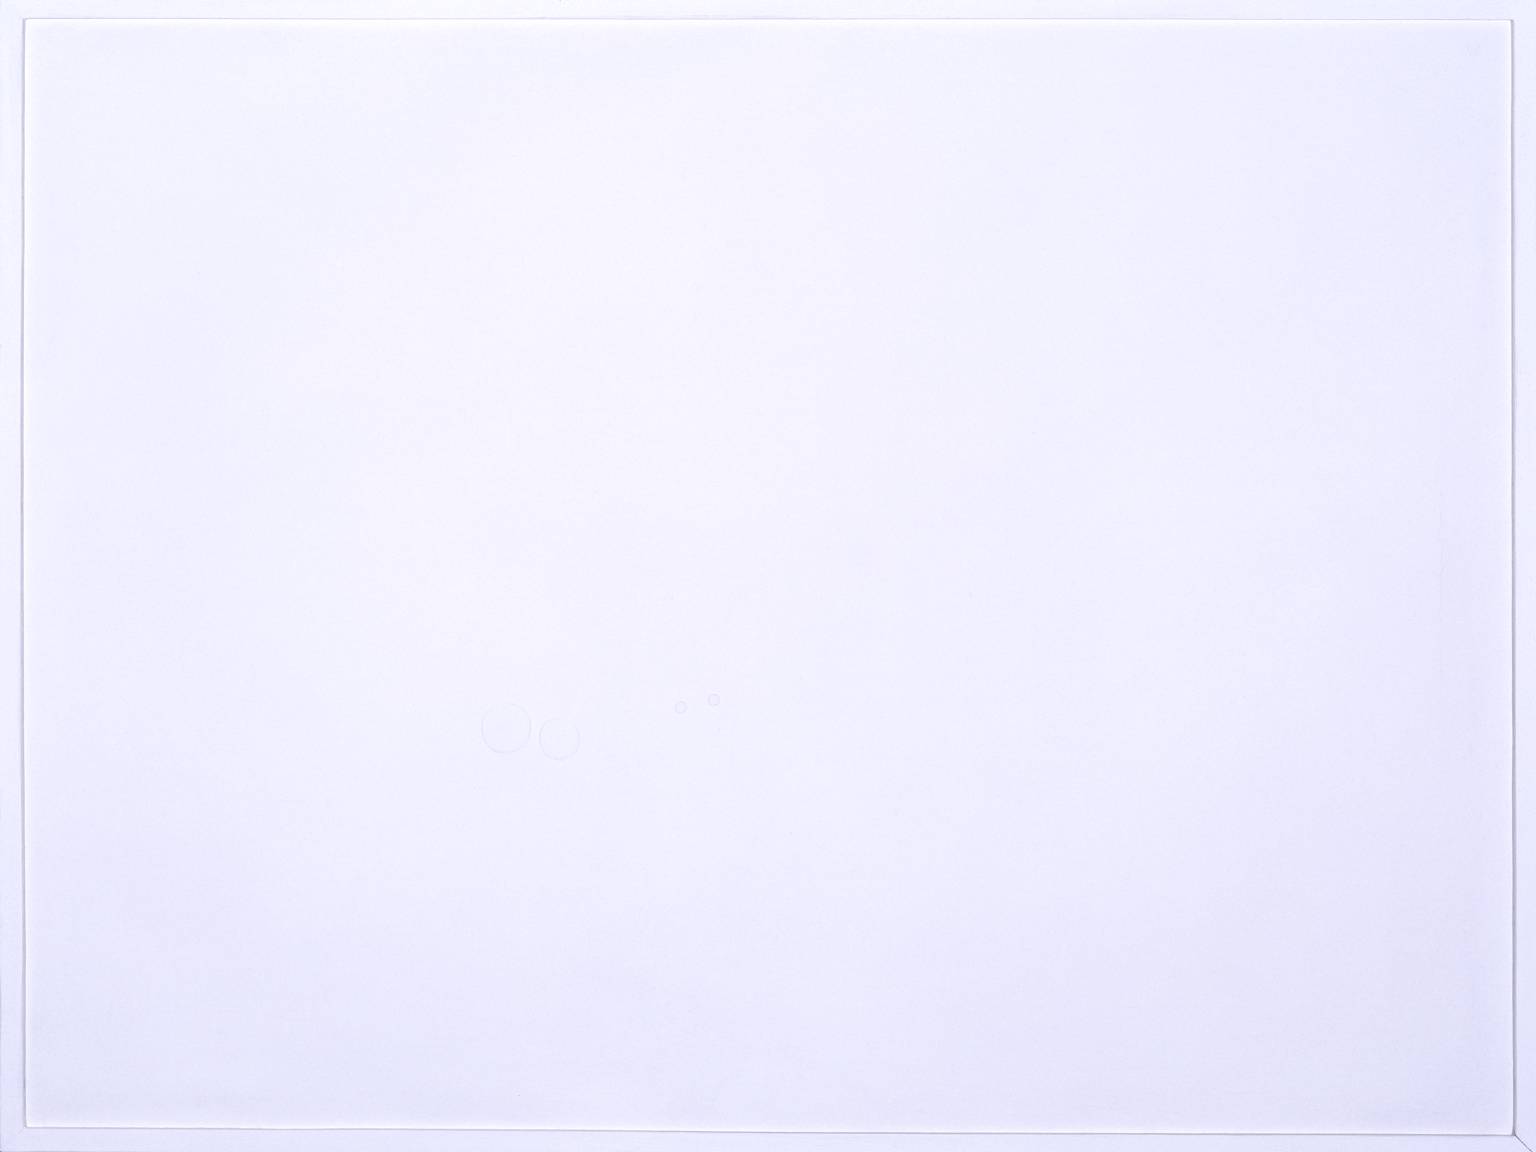 http://www.tate.org.uk/art/artworks/li-monochrome-white-painting-t11871